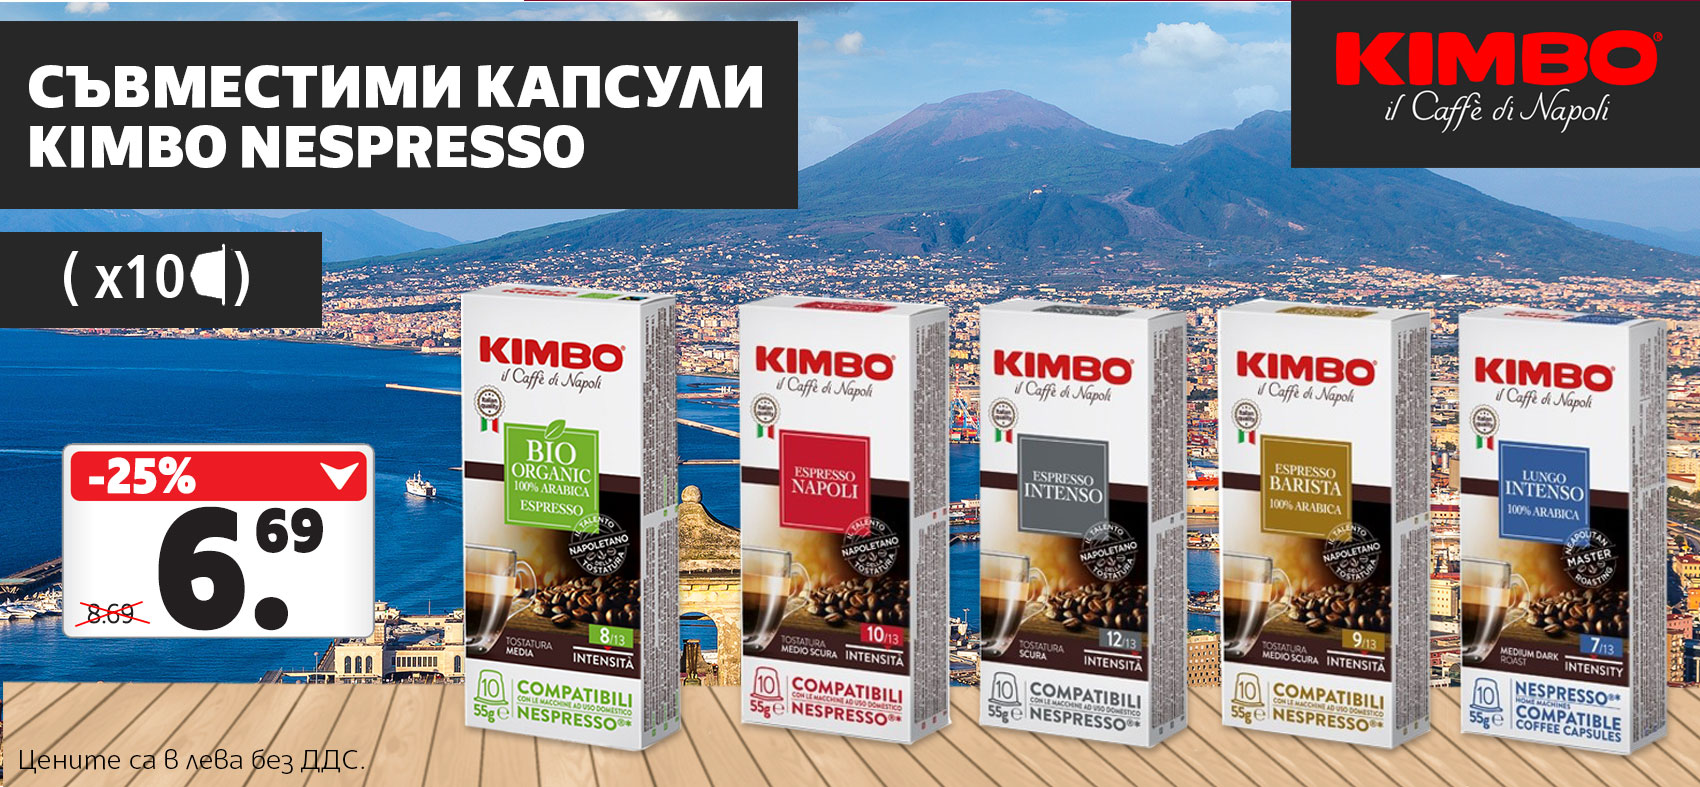 Съвместими капсули Kimbo nespresso